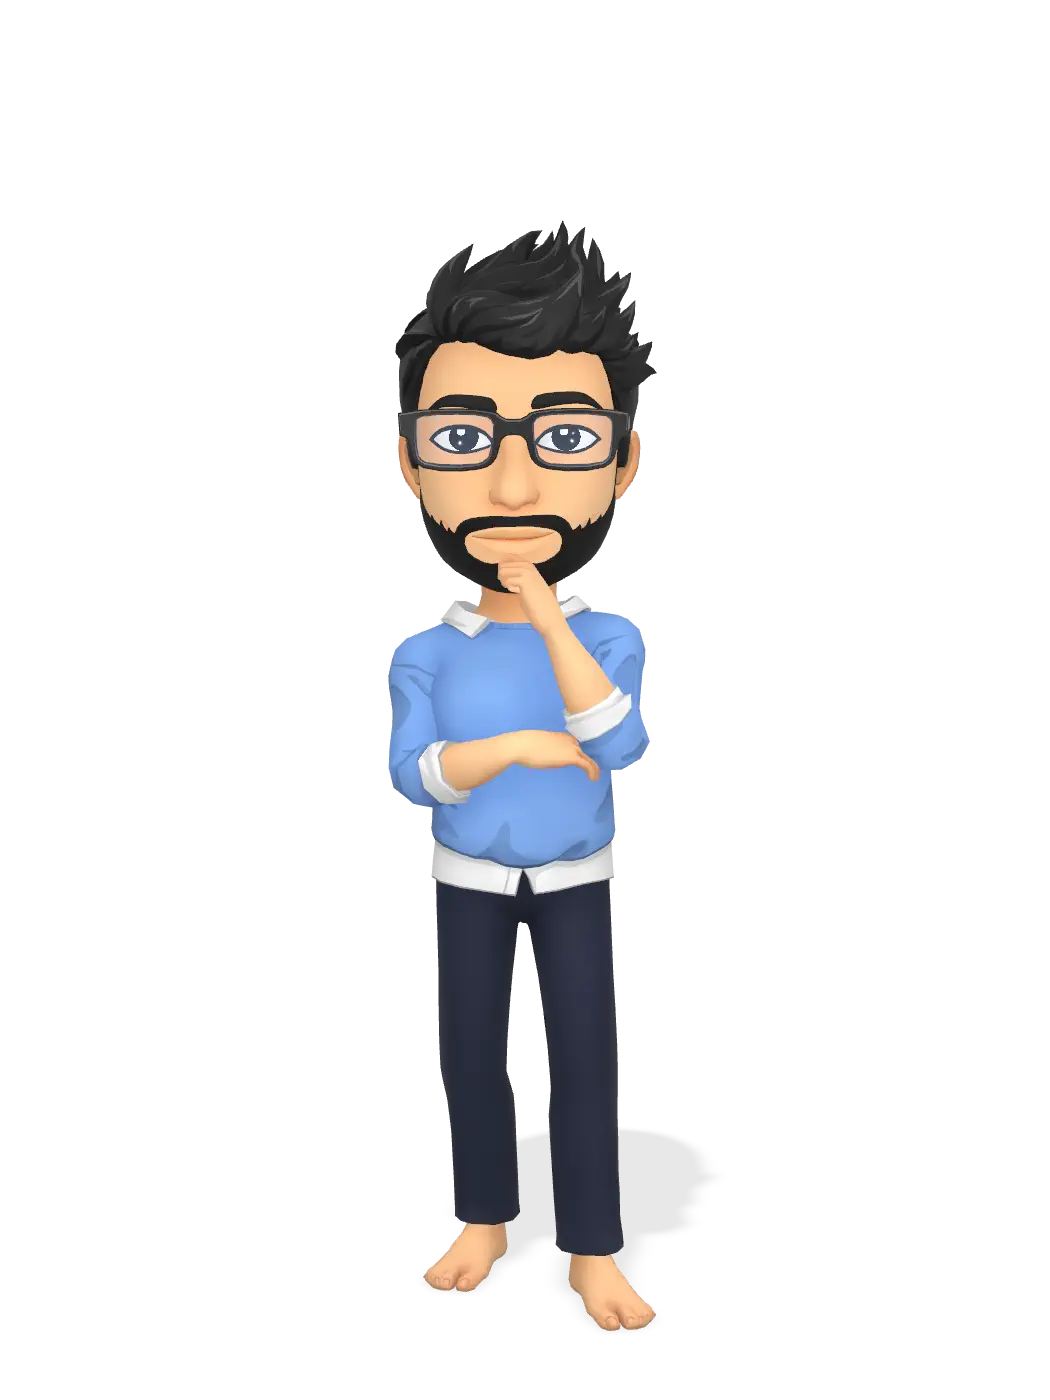 3D Bitmoji for praneeth2076 avatar